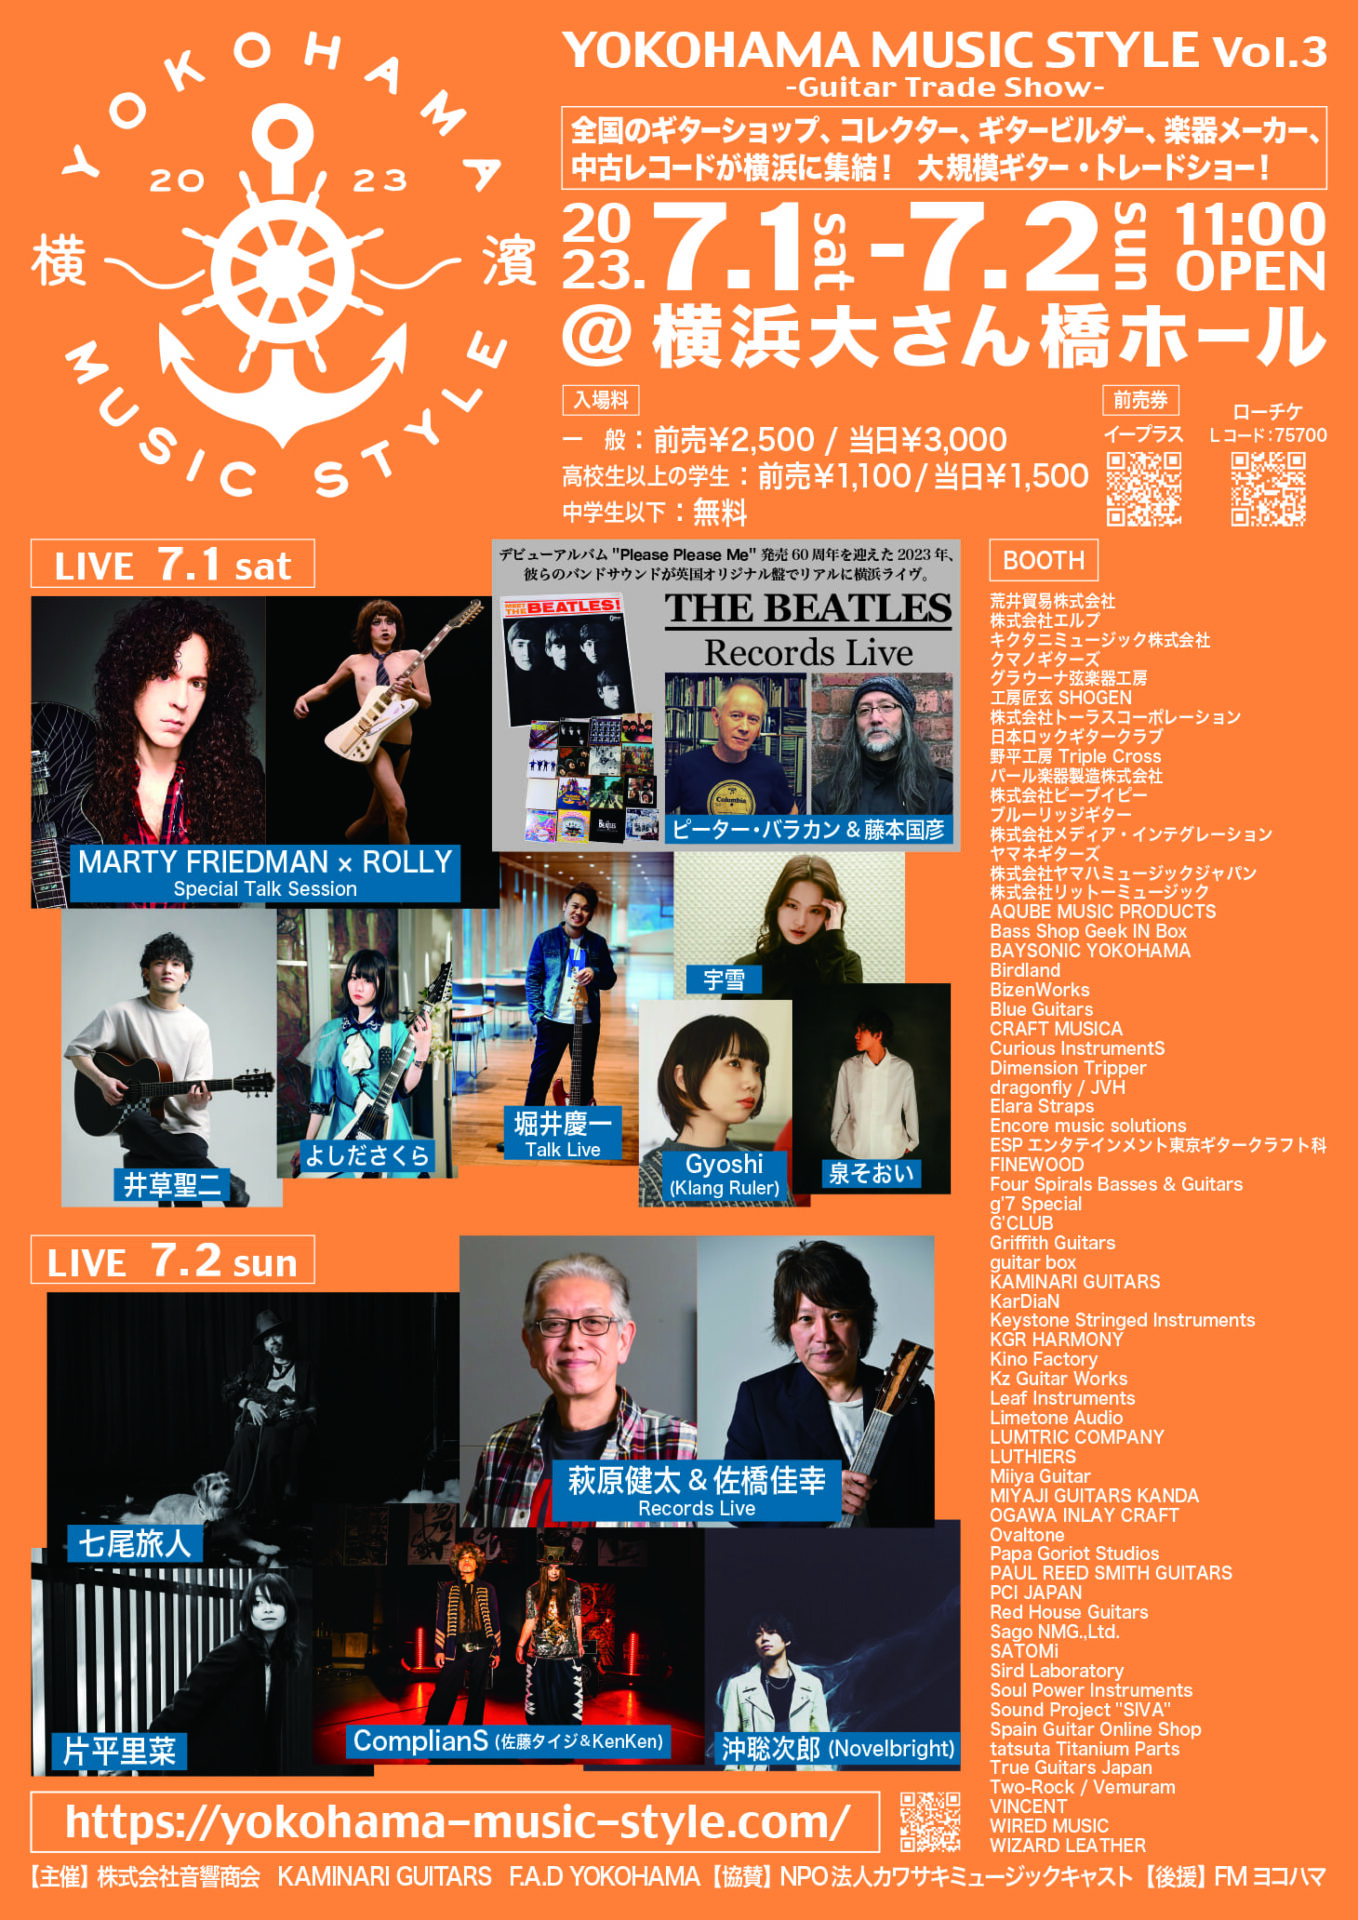 YOKOHAMA MUSIC STYLE Vol.3 -Guitar Trade Show-